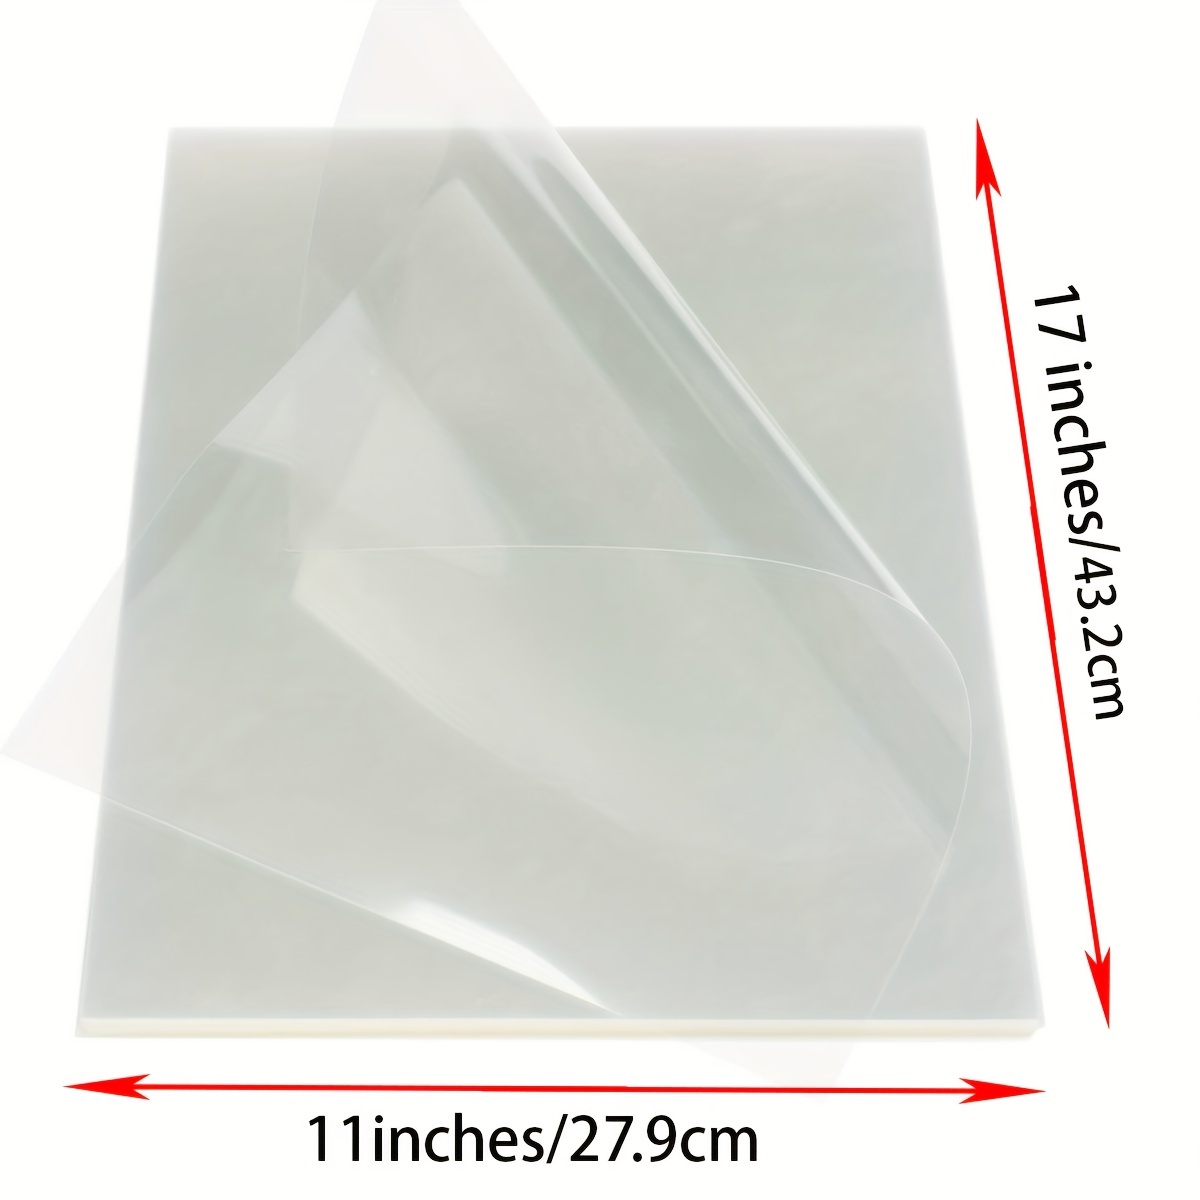 3M Transparency Film for Inkjet Printers CG3480 (35 Pack)